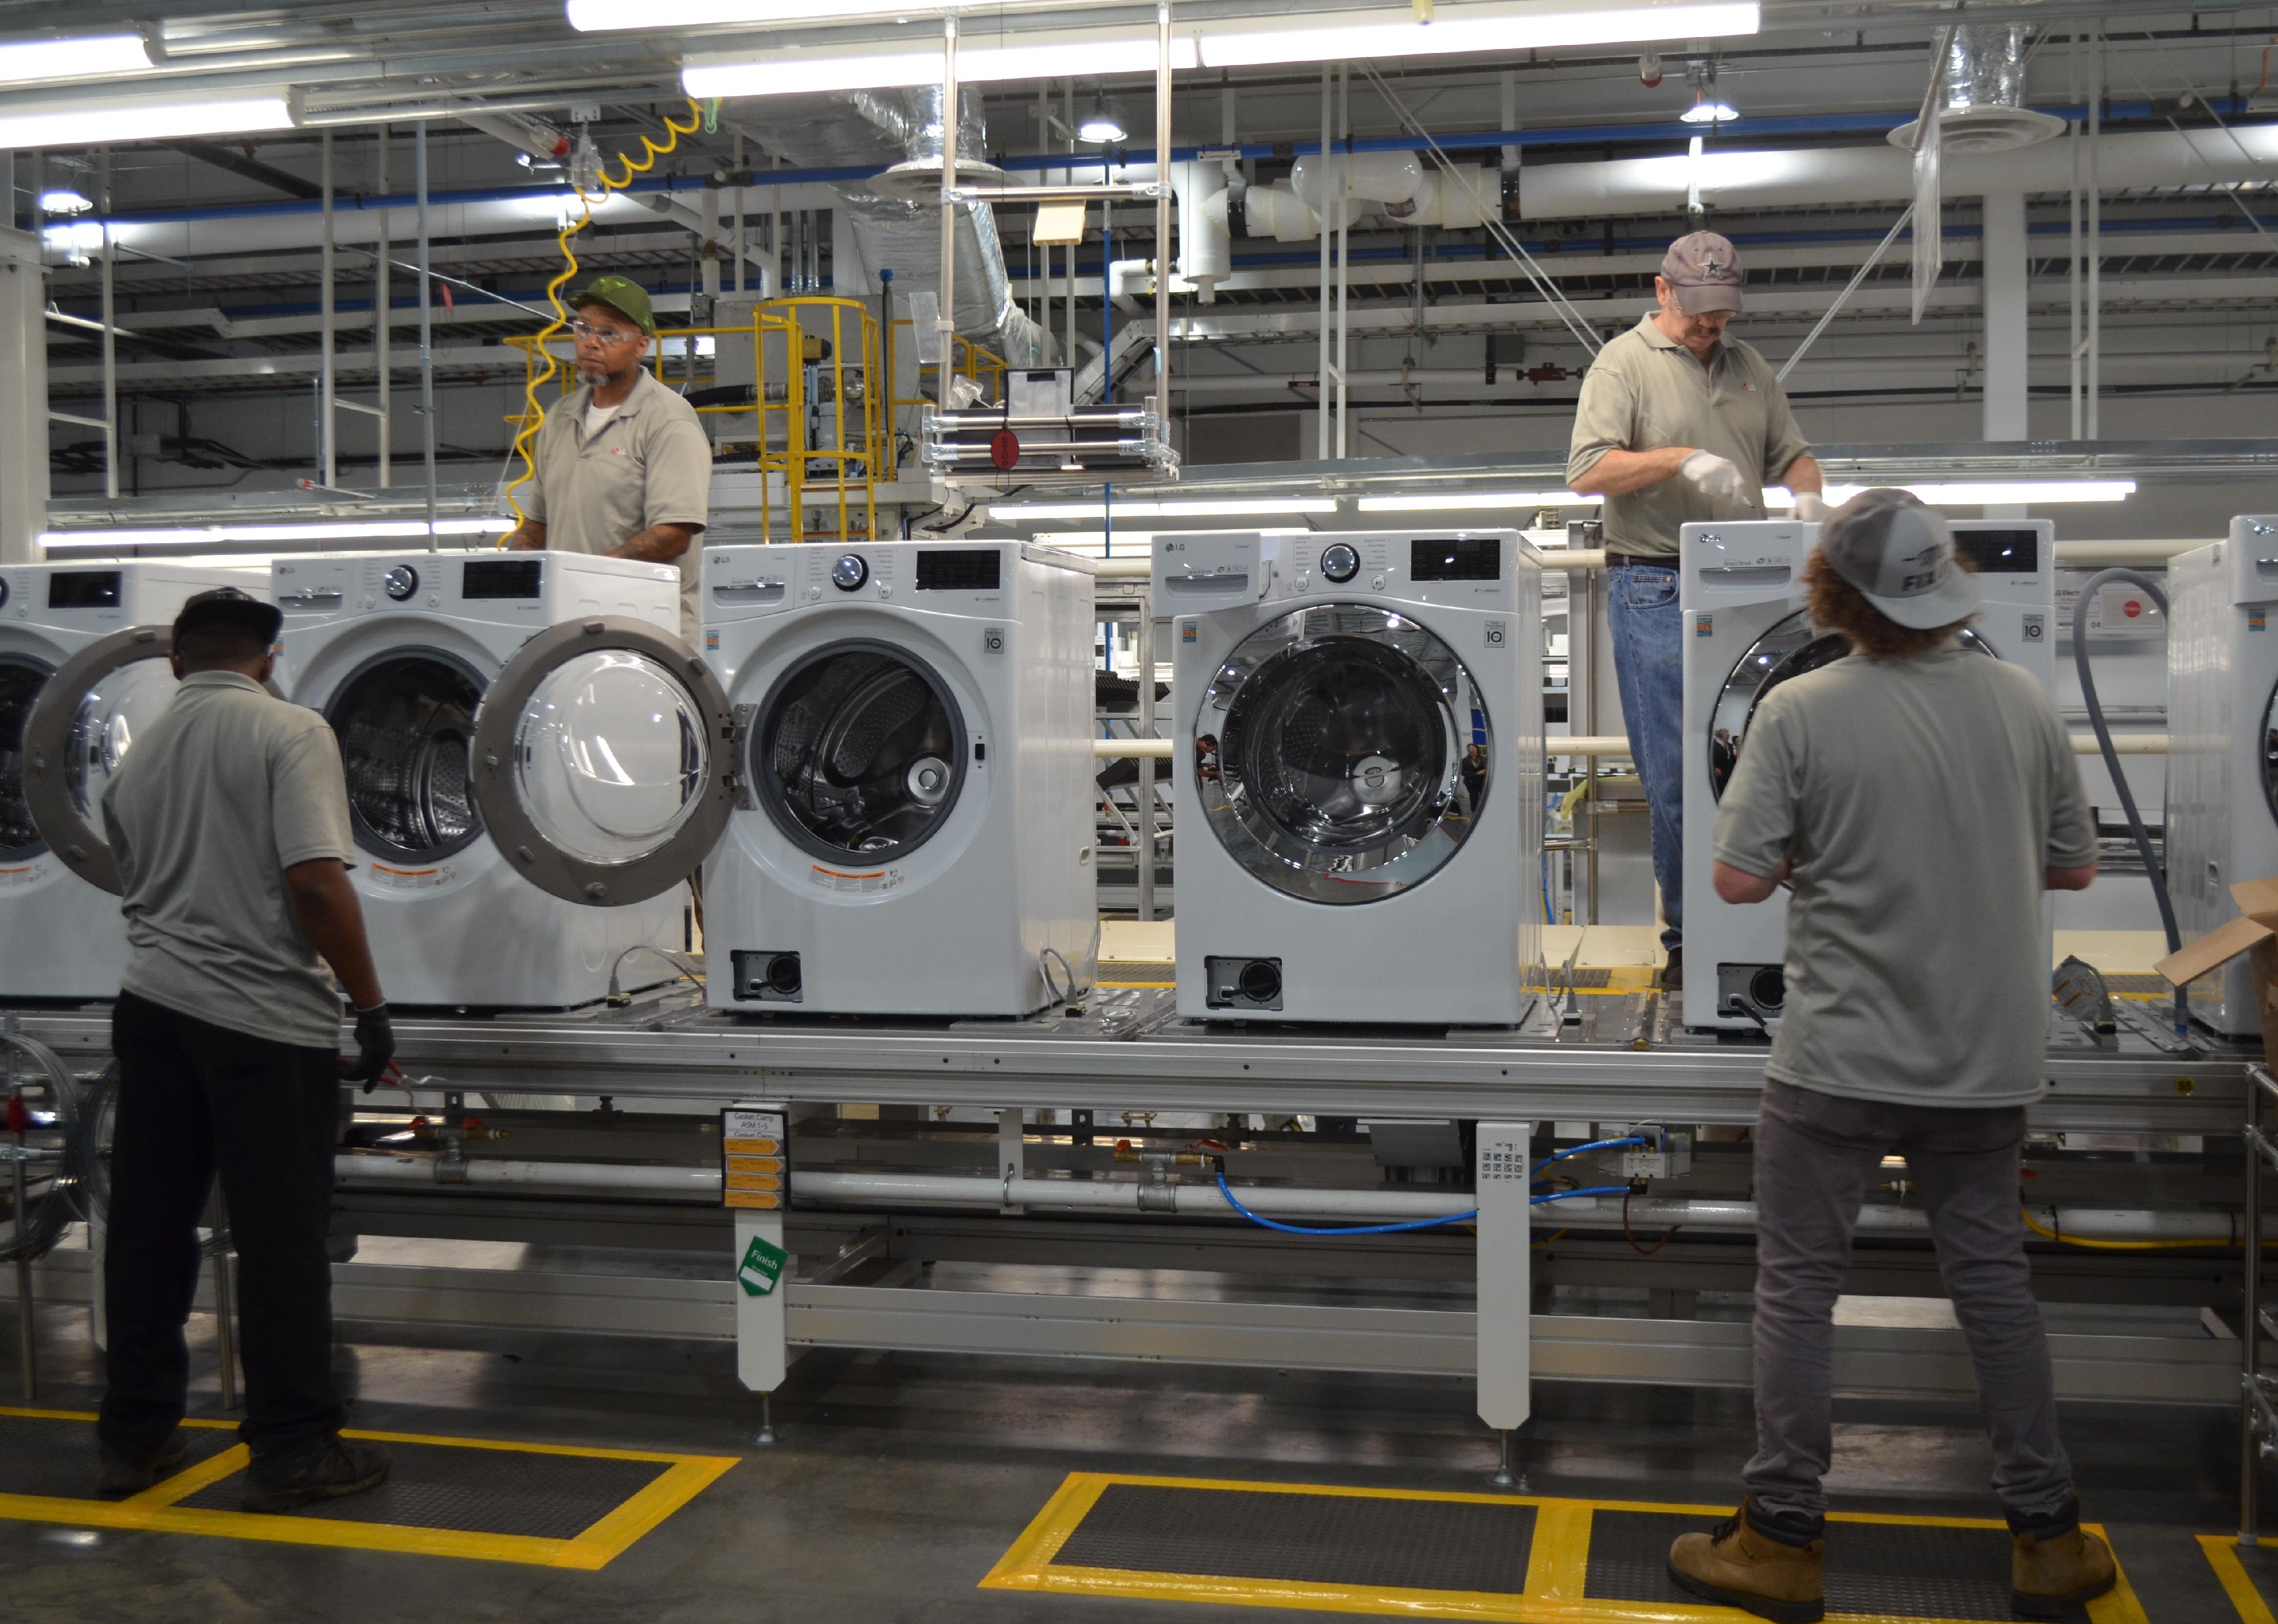 Employees work on LG washing machines